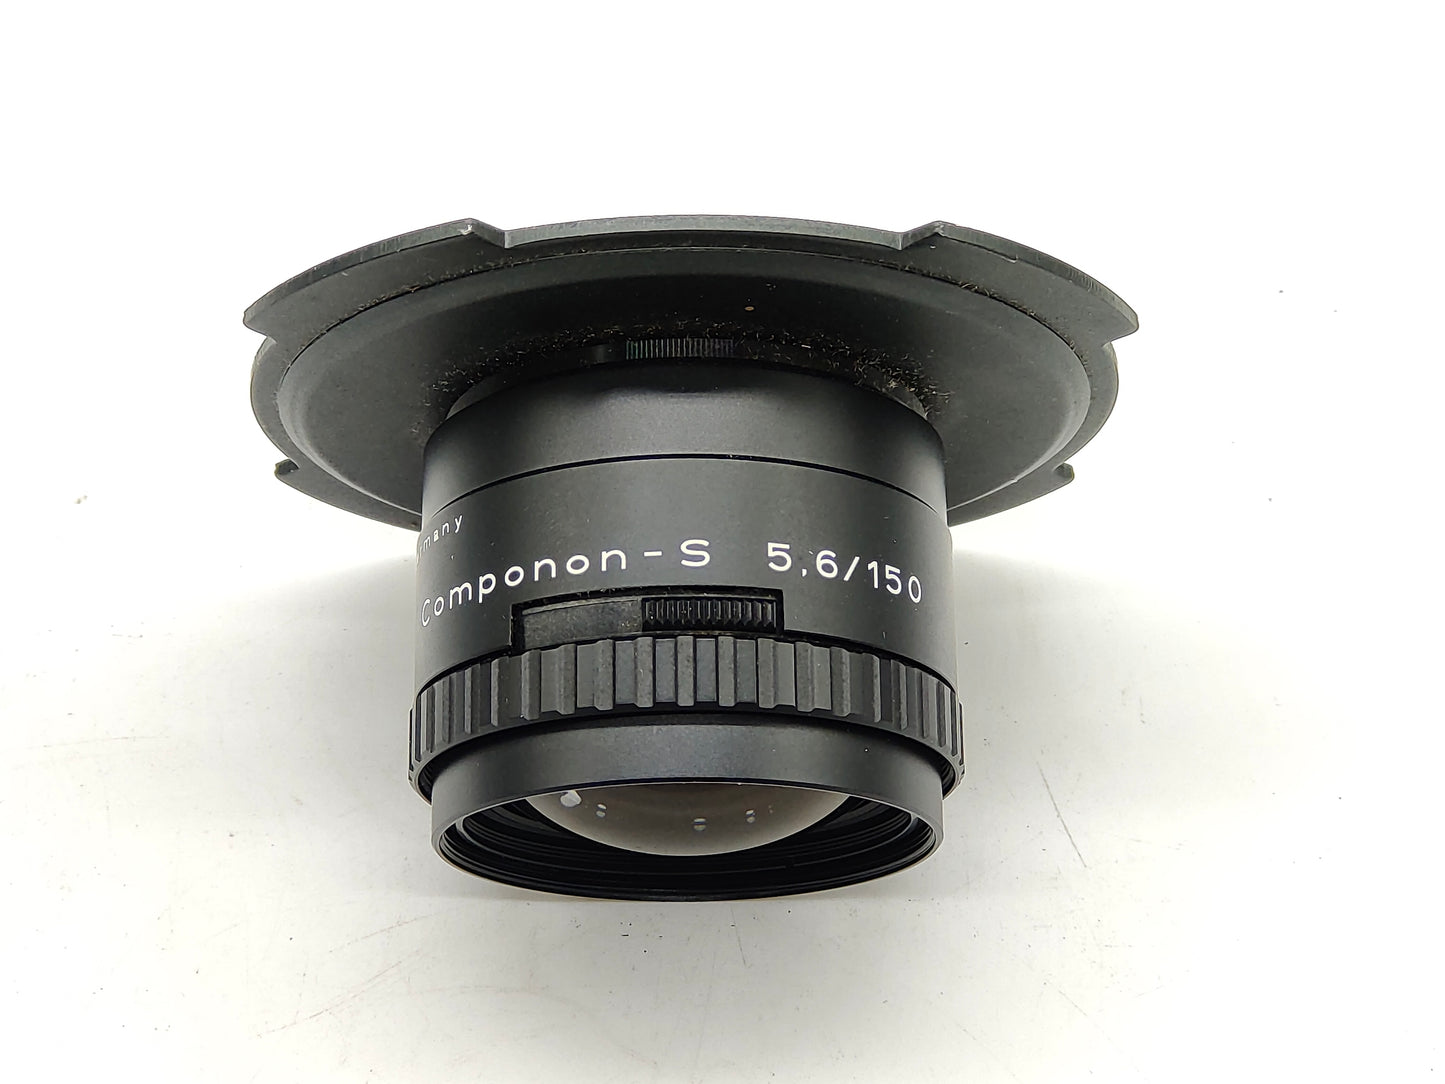 Schneider-Kreuznach 150mm f/5.6 enlarging lens